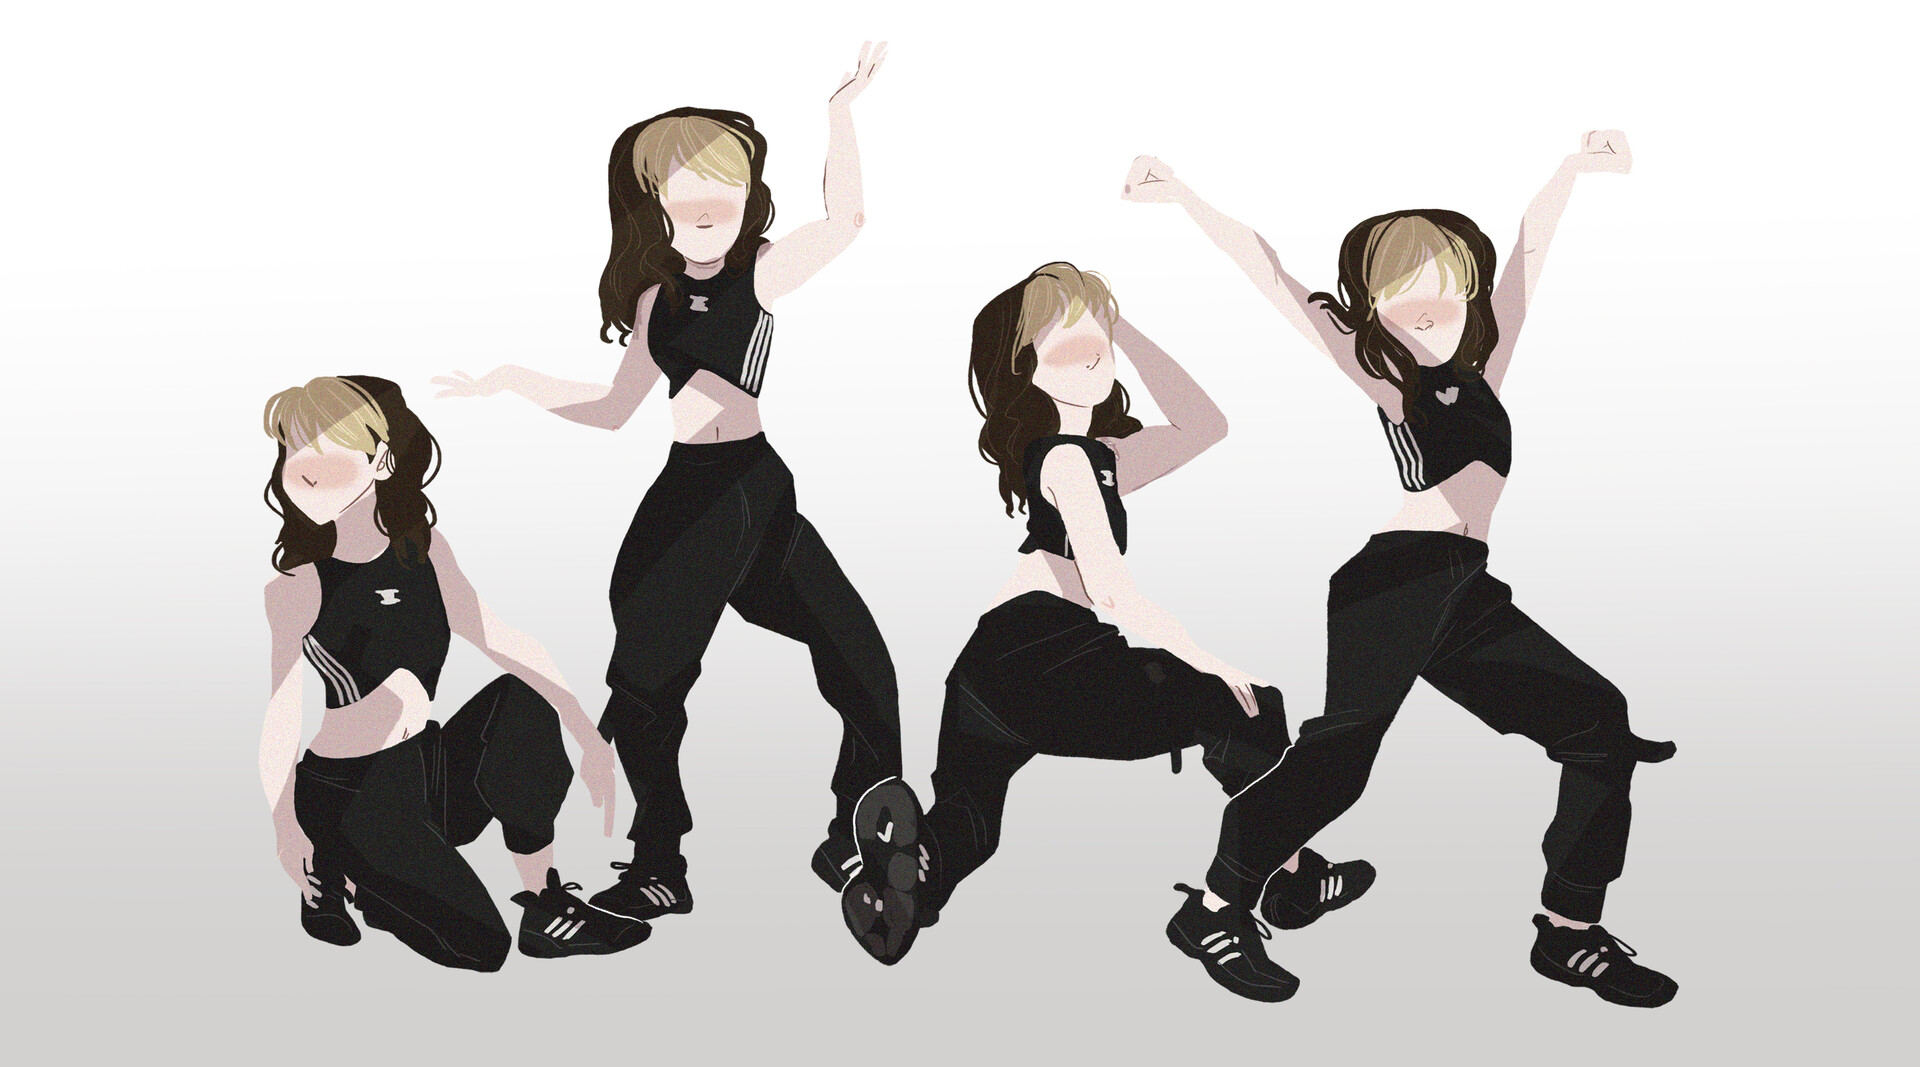 Dance poses (11 poses) - CLIP STUDIO ASSETS